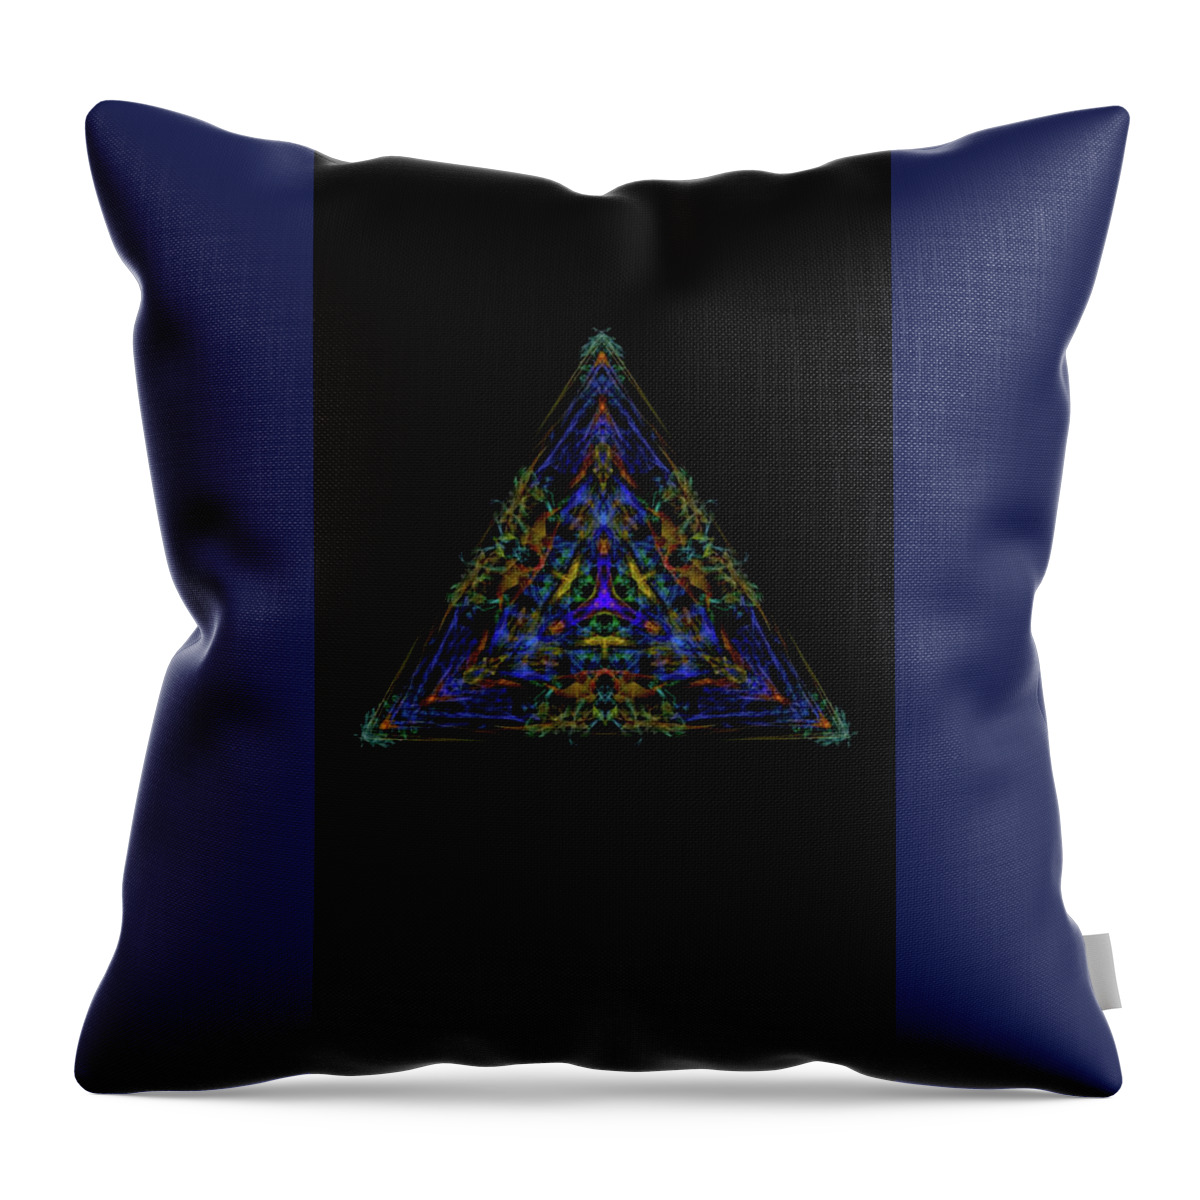 Kosmic Kreation Interstellar Pyramid Throw Pillow featuring the digital art Kosmic Kreation Interstellar Pyramid by Michael Canteen